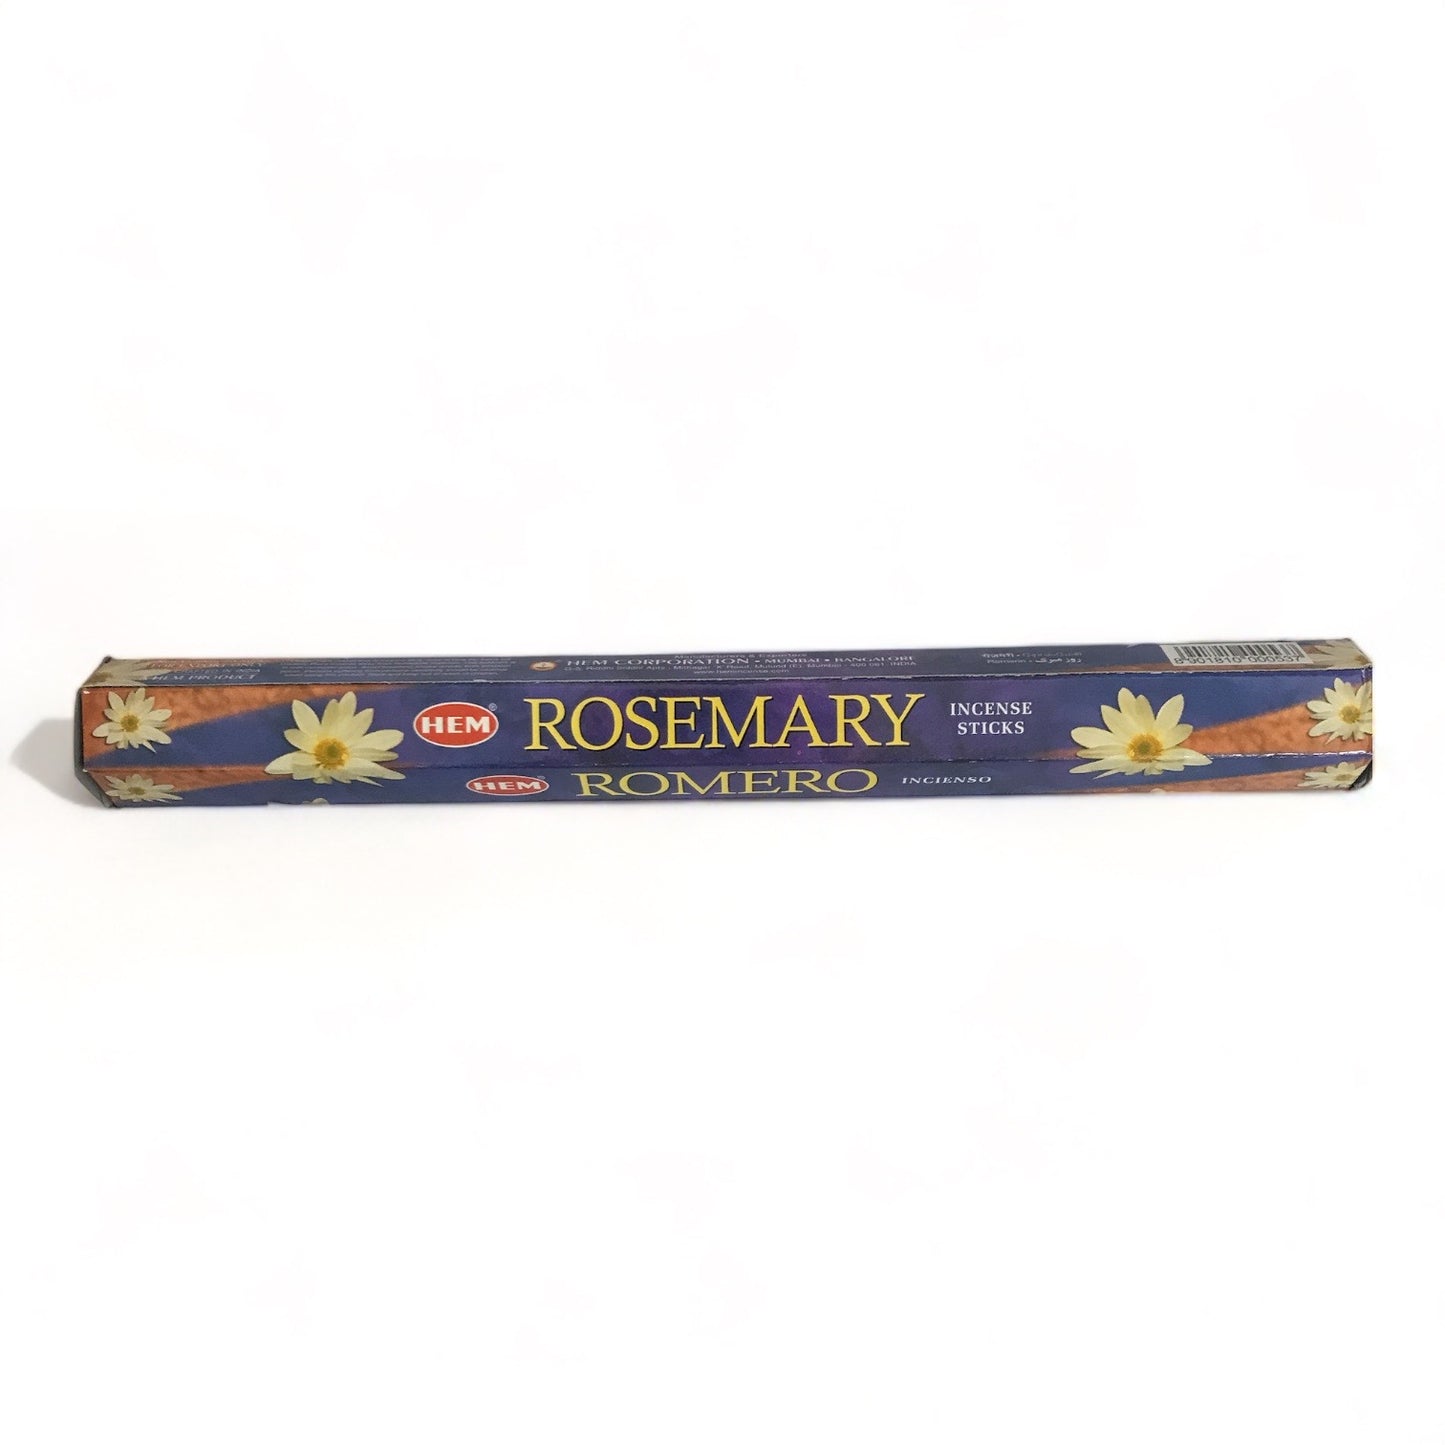 Rosemary Incense Sticks - Hem